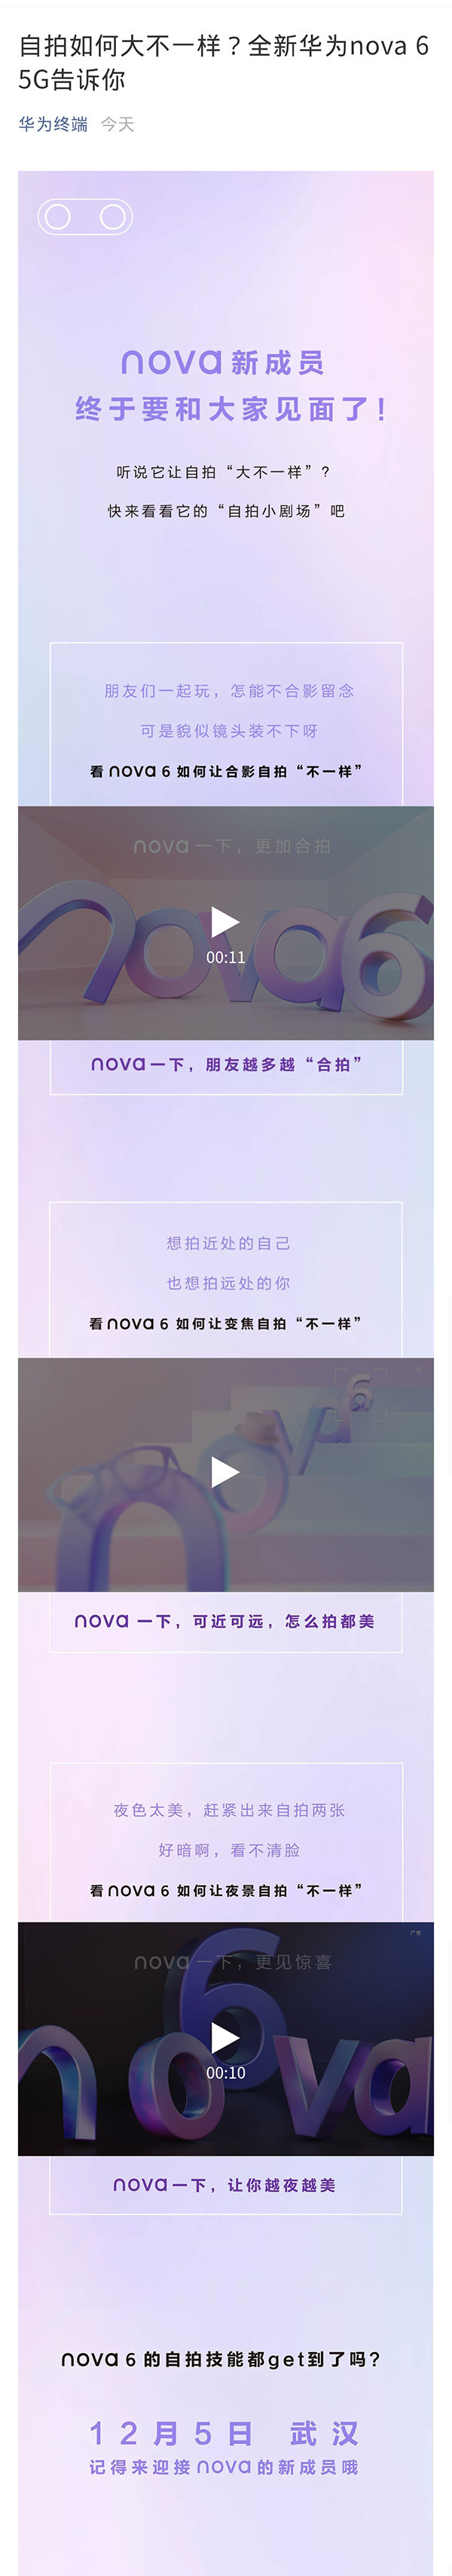  Huawei Nova 6: стали известны характеристики и дата презентации Huawei  - 1684891-4